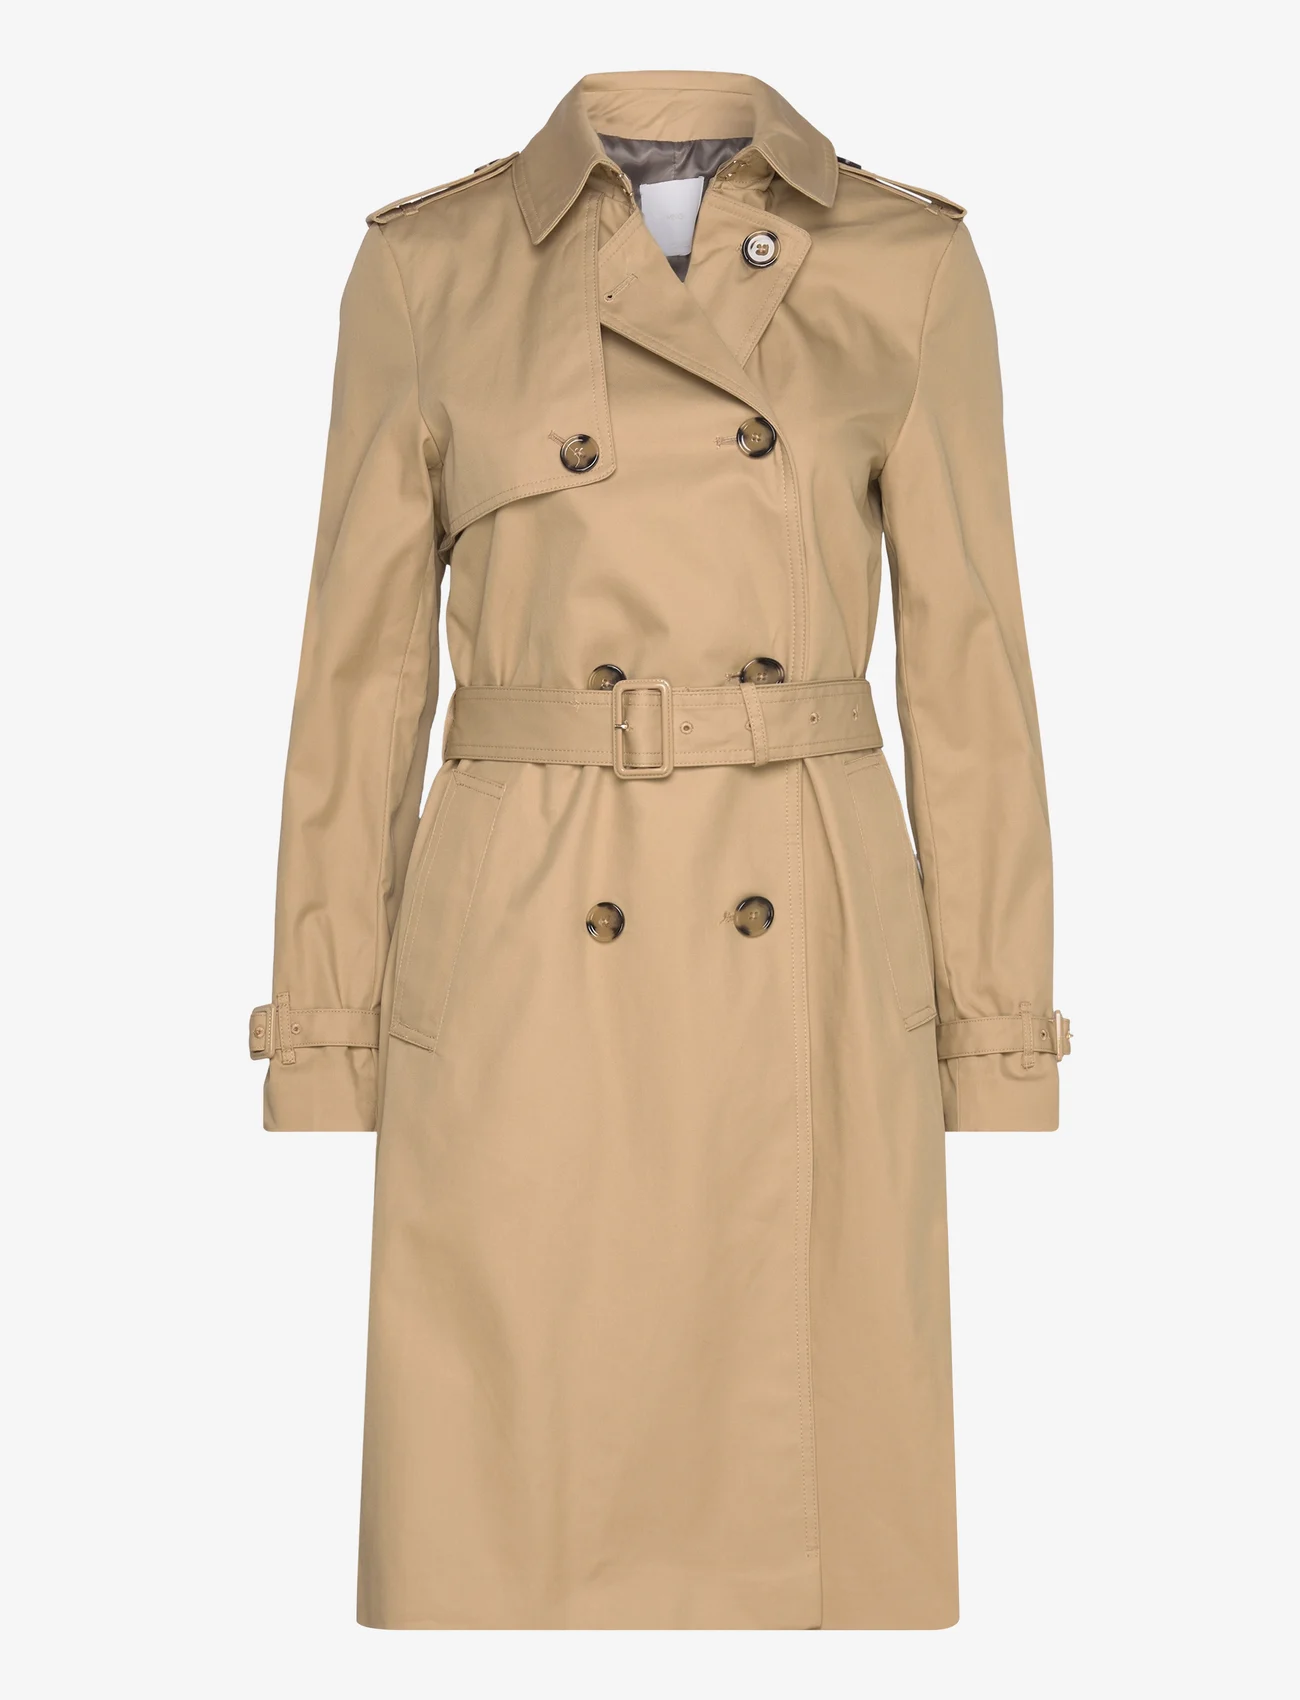 Mango - Classic trench coat with belt - vårjakker - light beige - 0